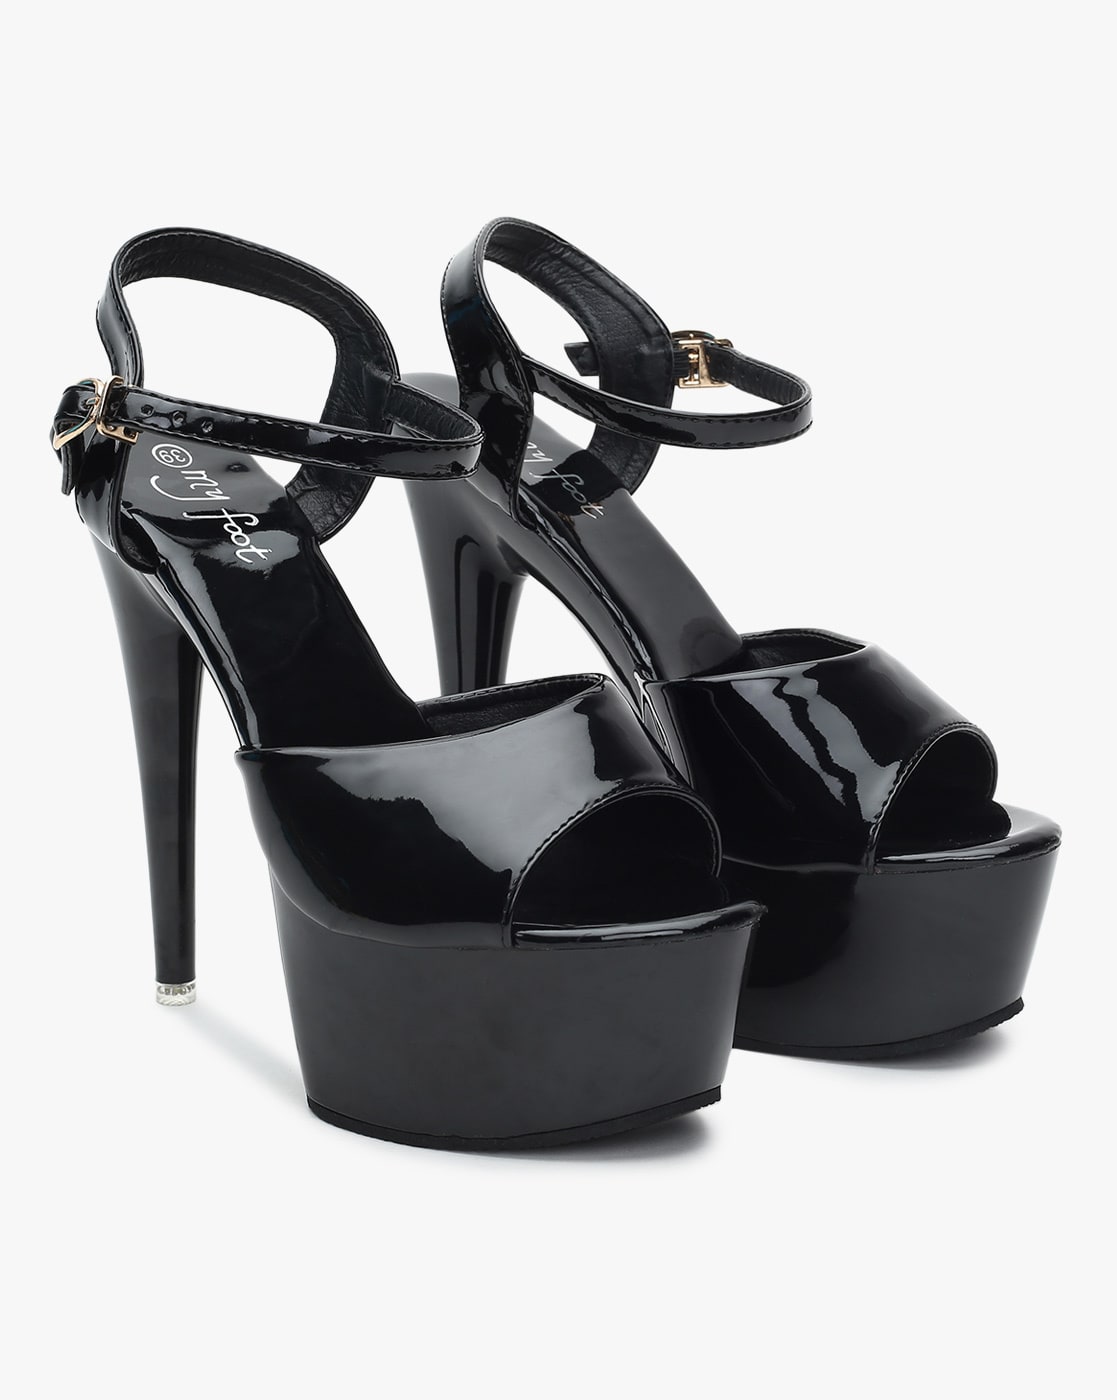 Gold Ankle Strap 6 Inch High Heels Forever Pumps | Heels, Fashion high heels,  Stiletto heels